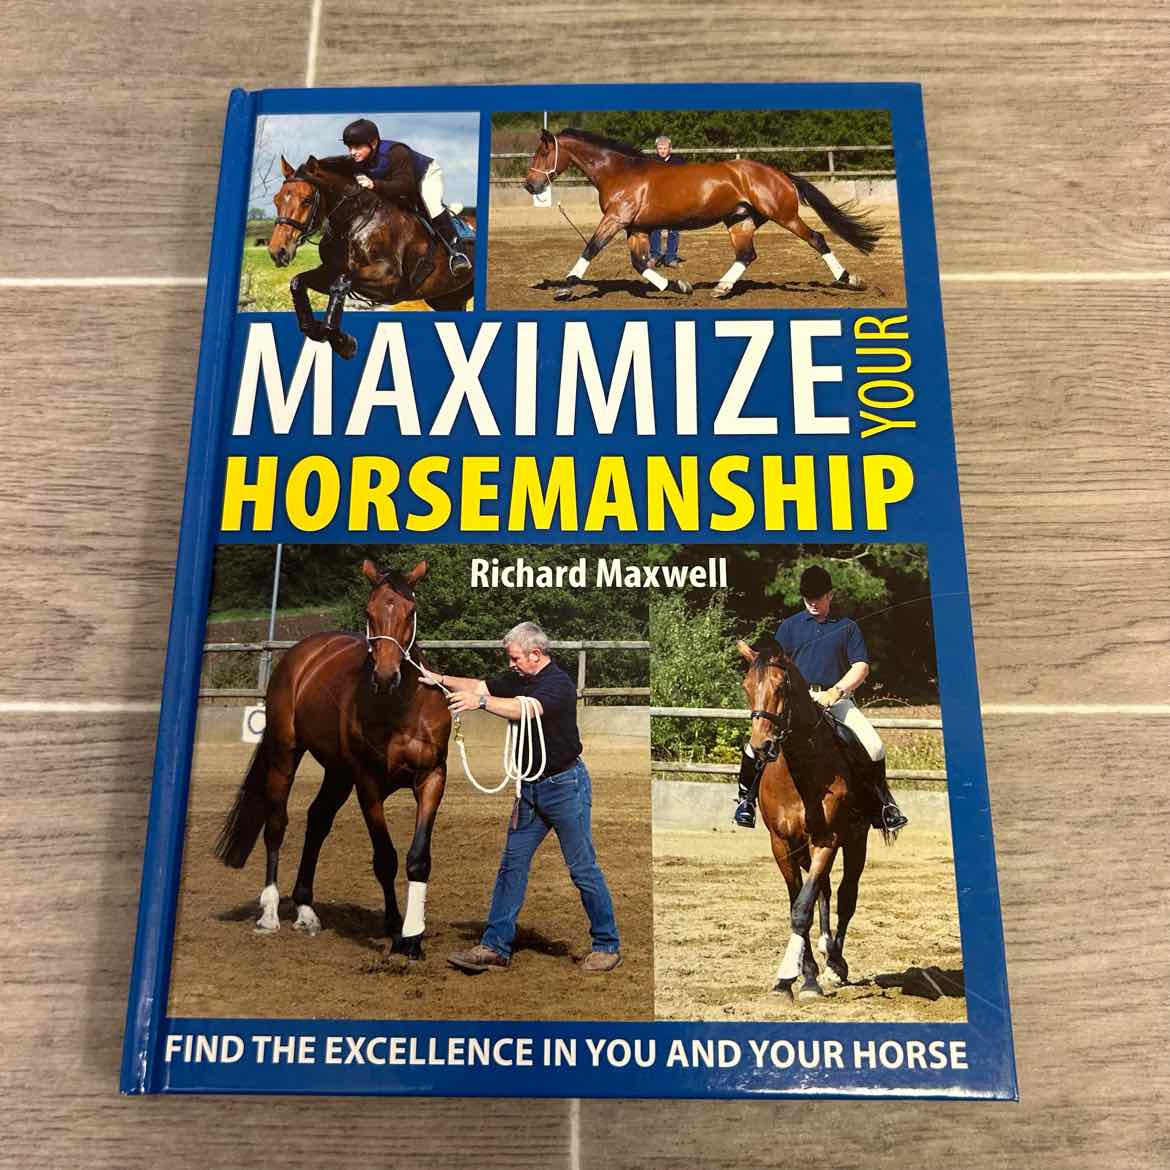 Maximize Your Horsemanship by Richard Maxwell